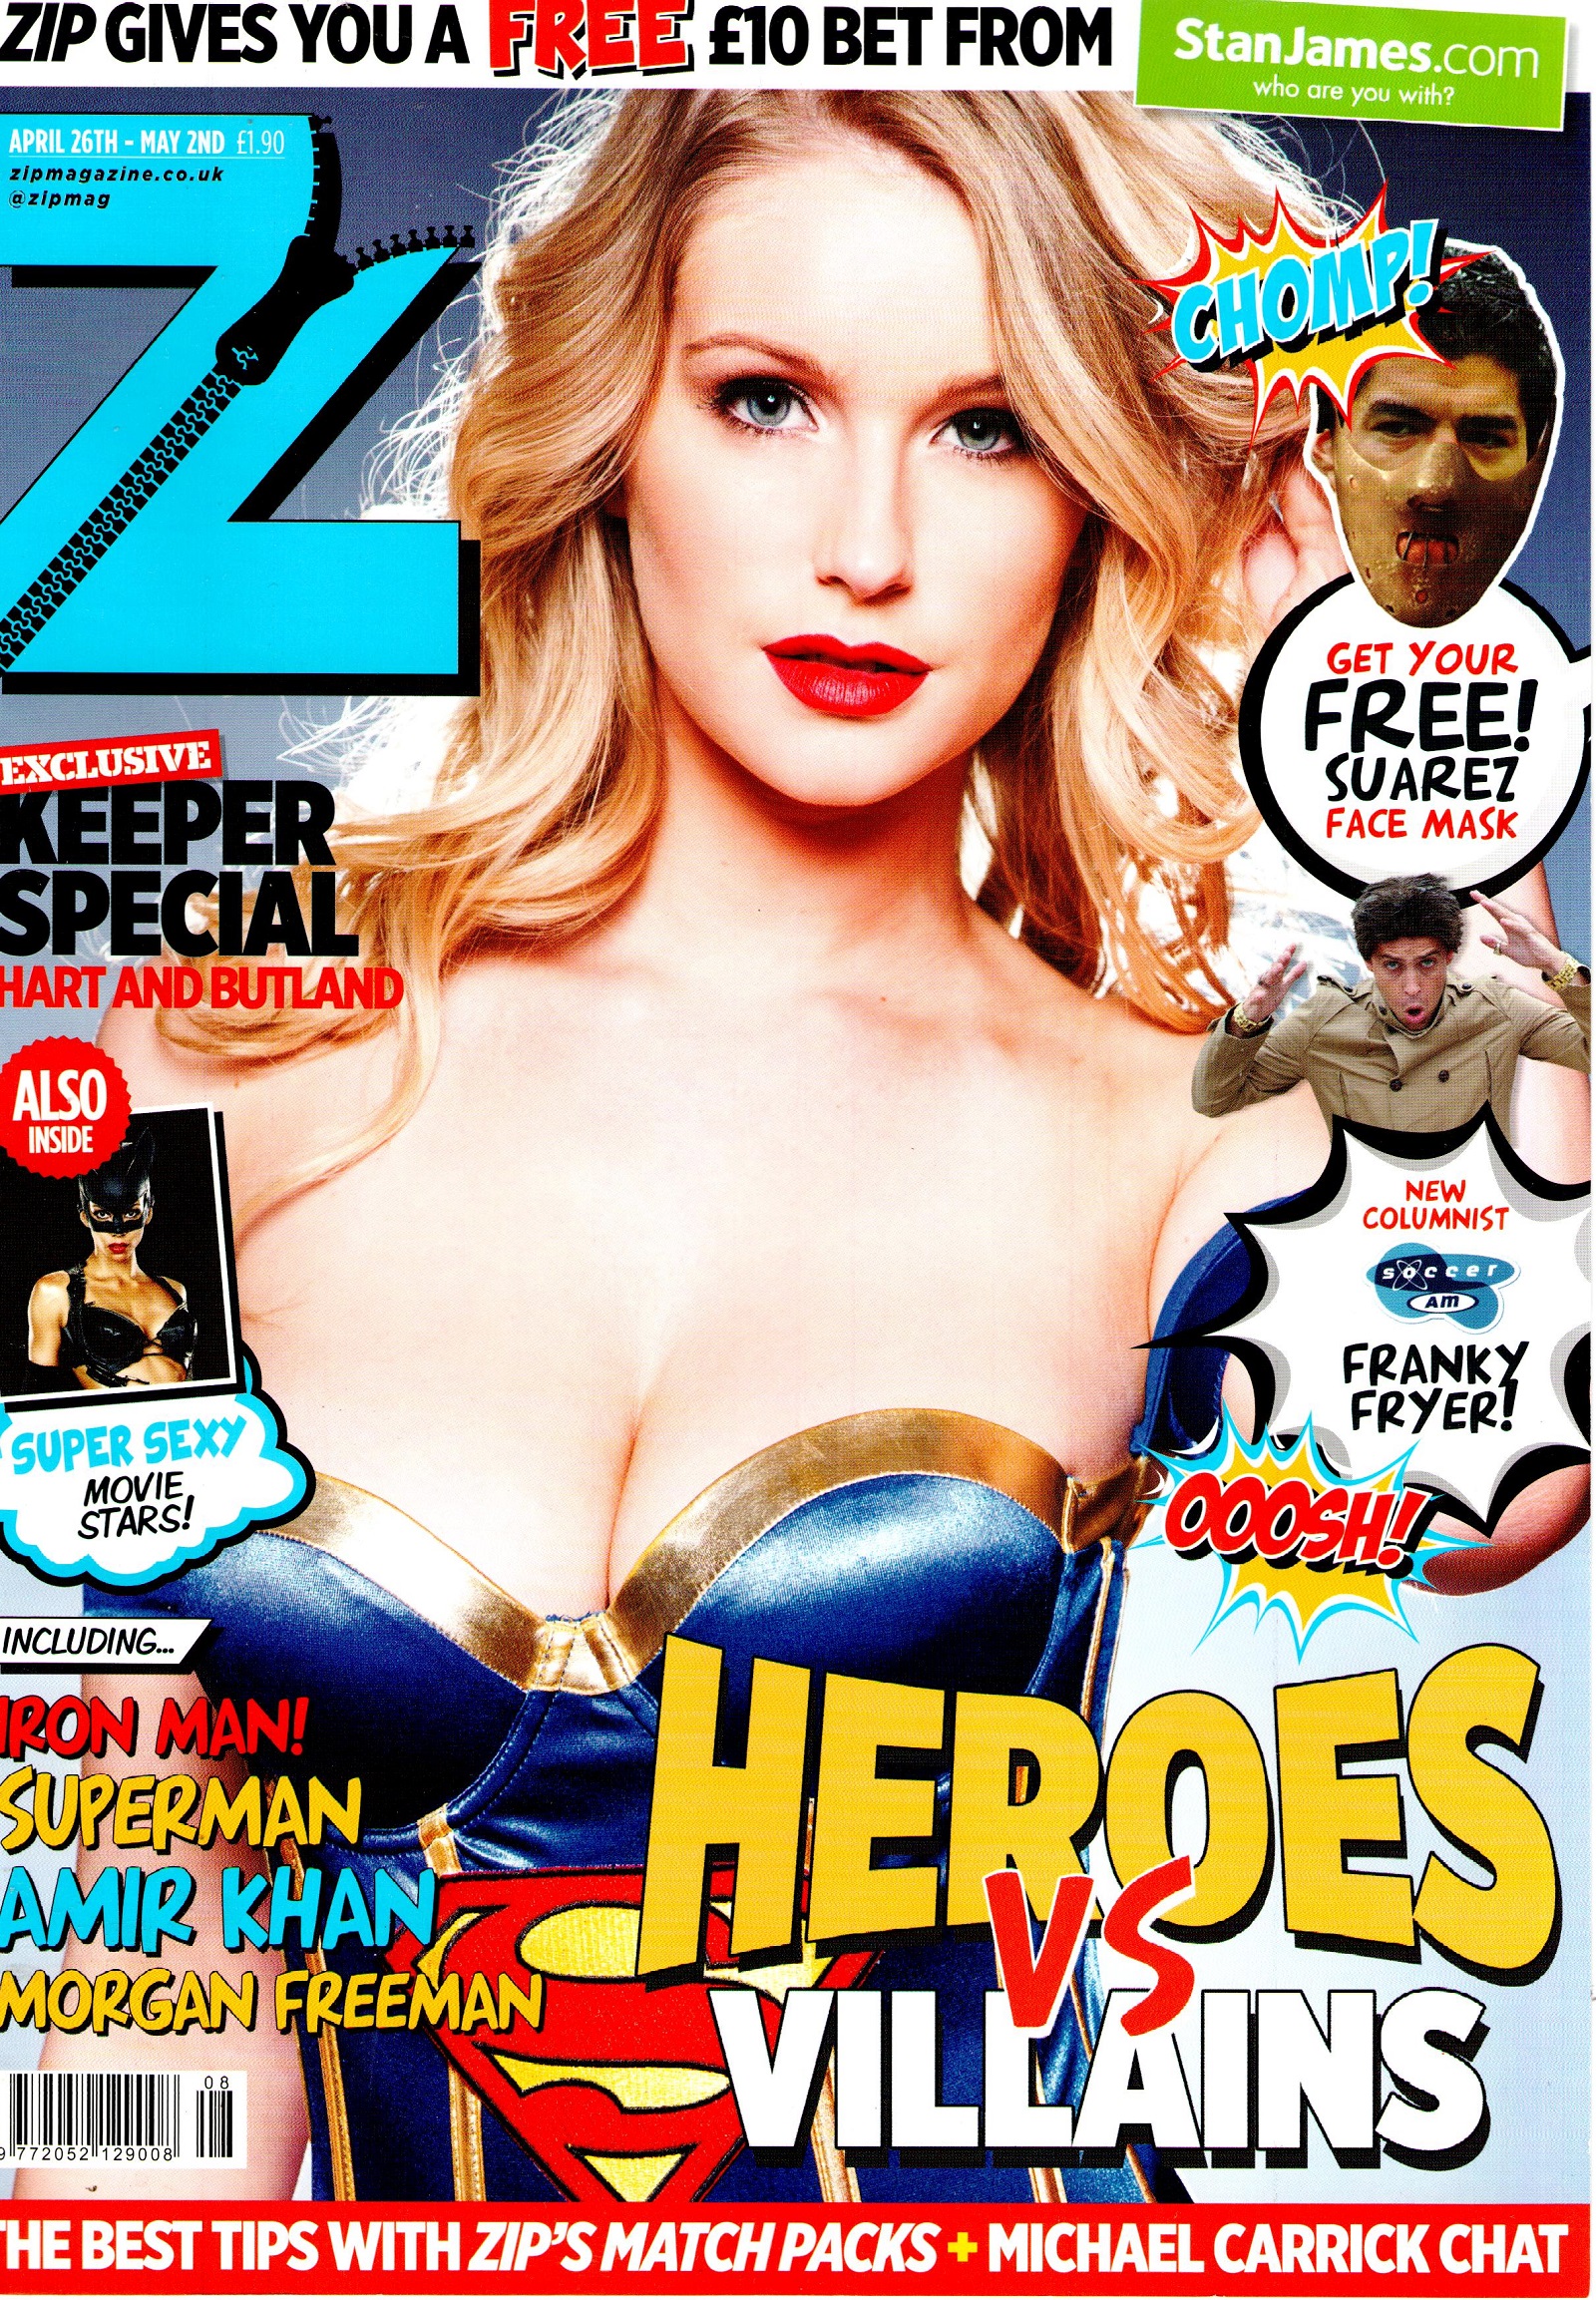 Jess Davies is Super Girl for ZIP Magazine